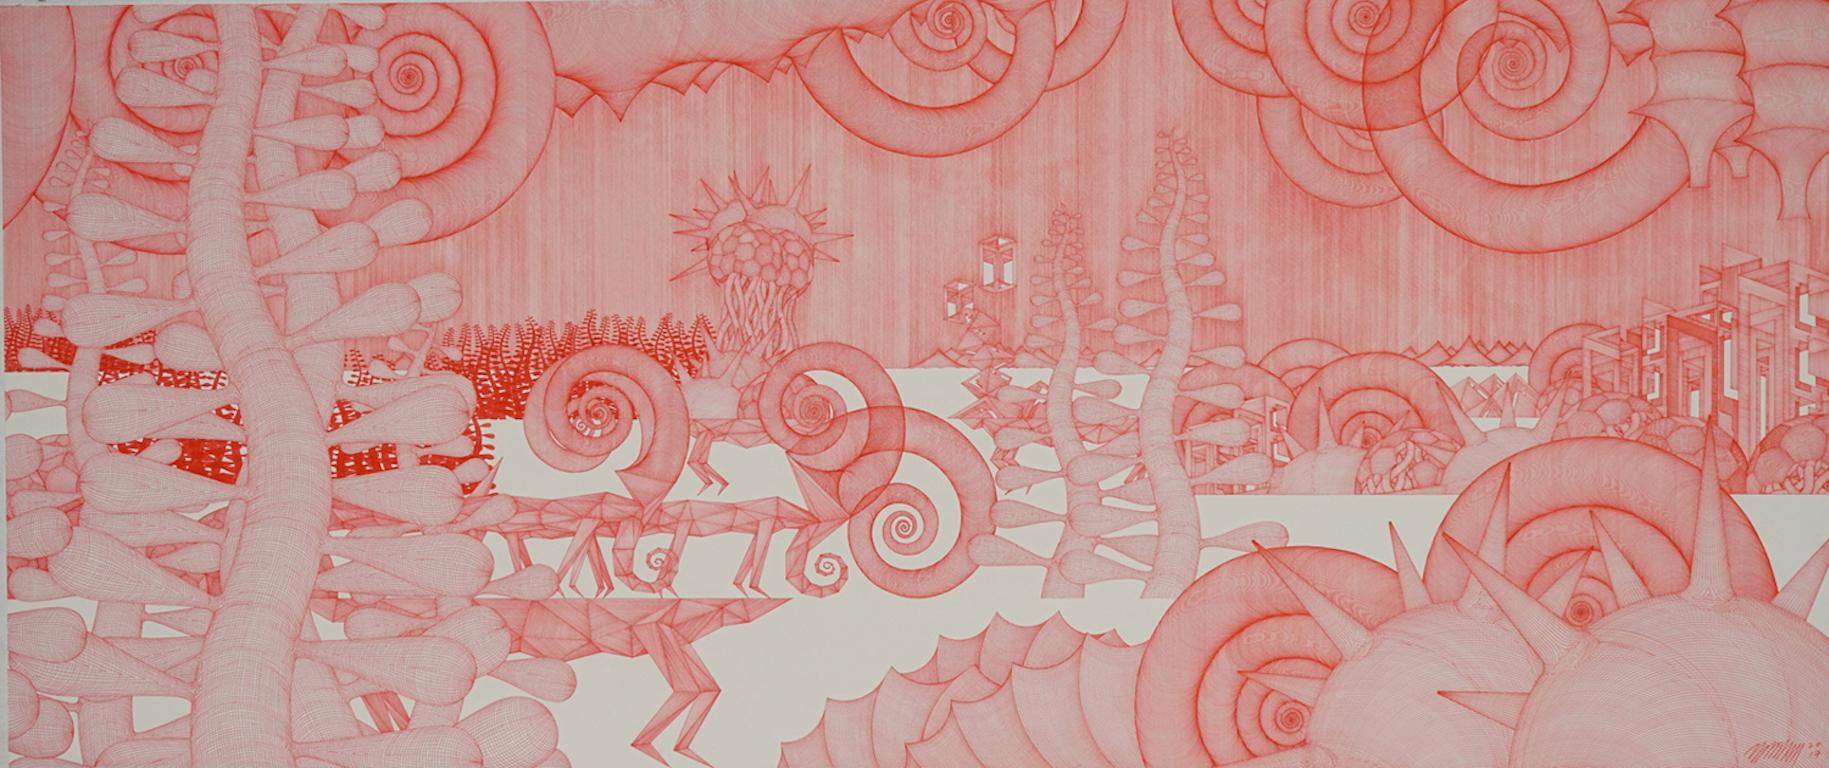 Journey #27 (monochrome red pen drawing wood detailed oriental dansaekhwa)